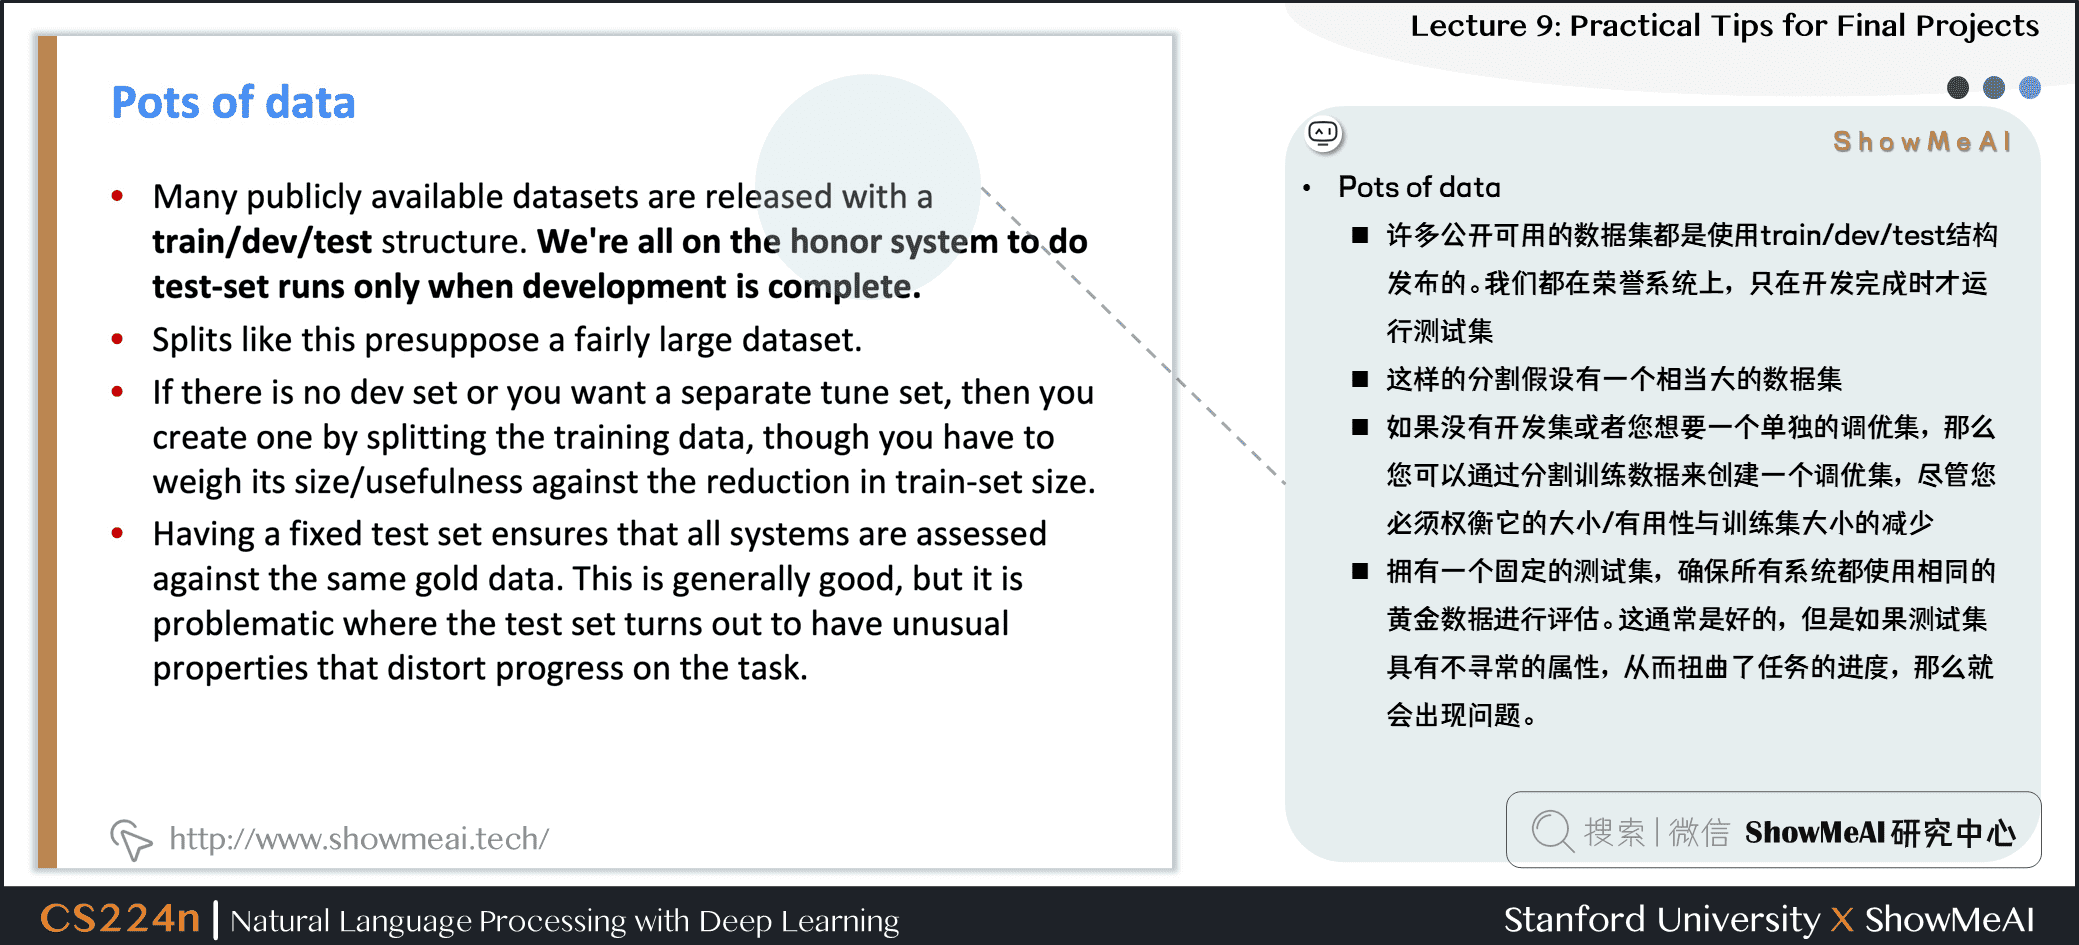 Pots of data